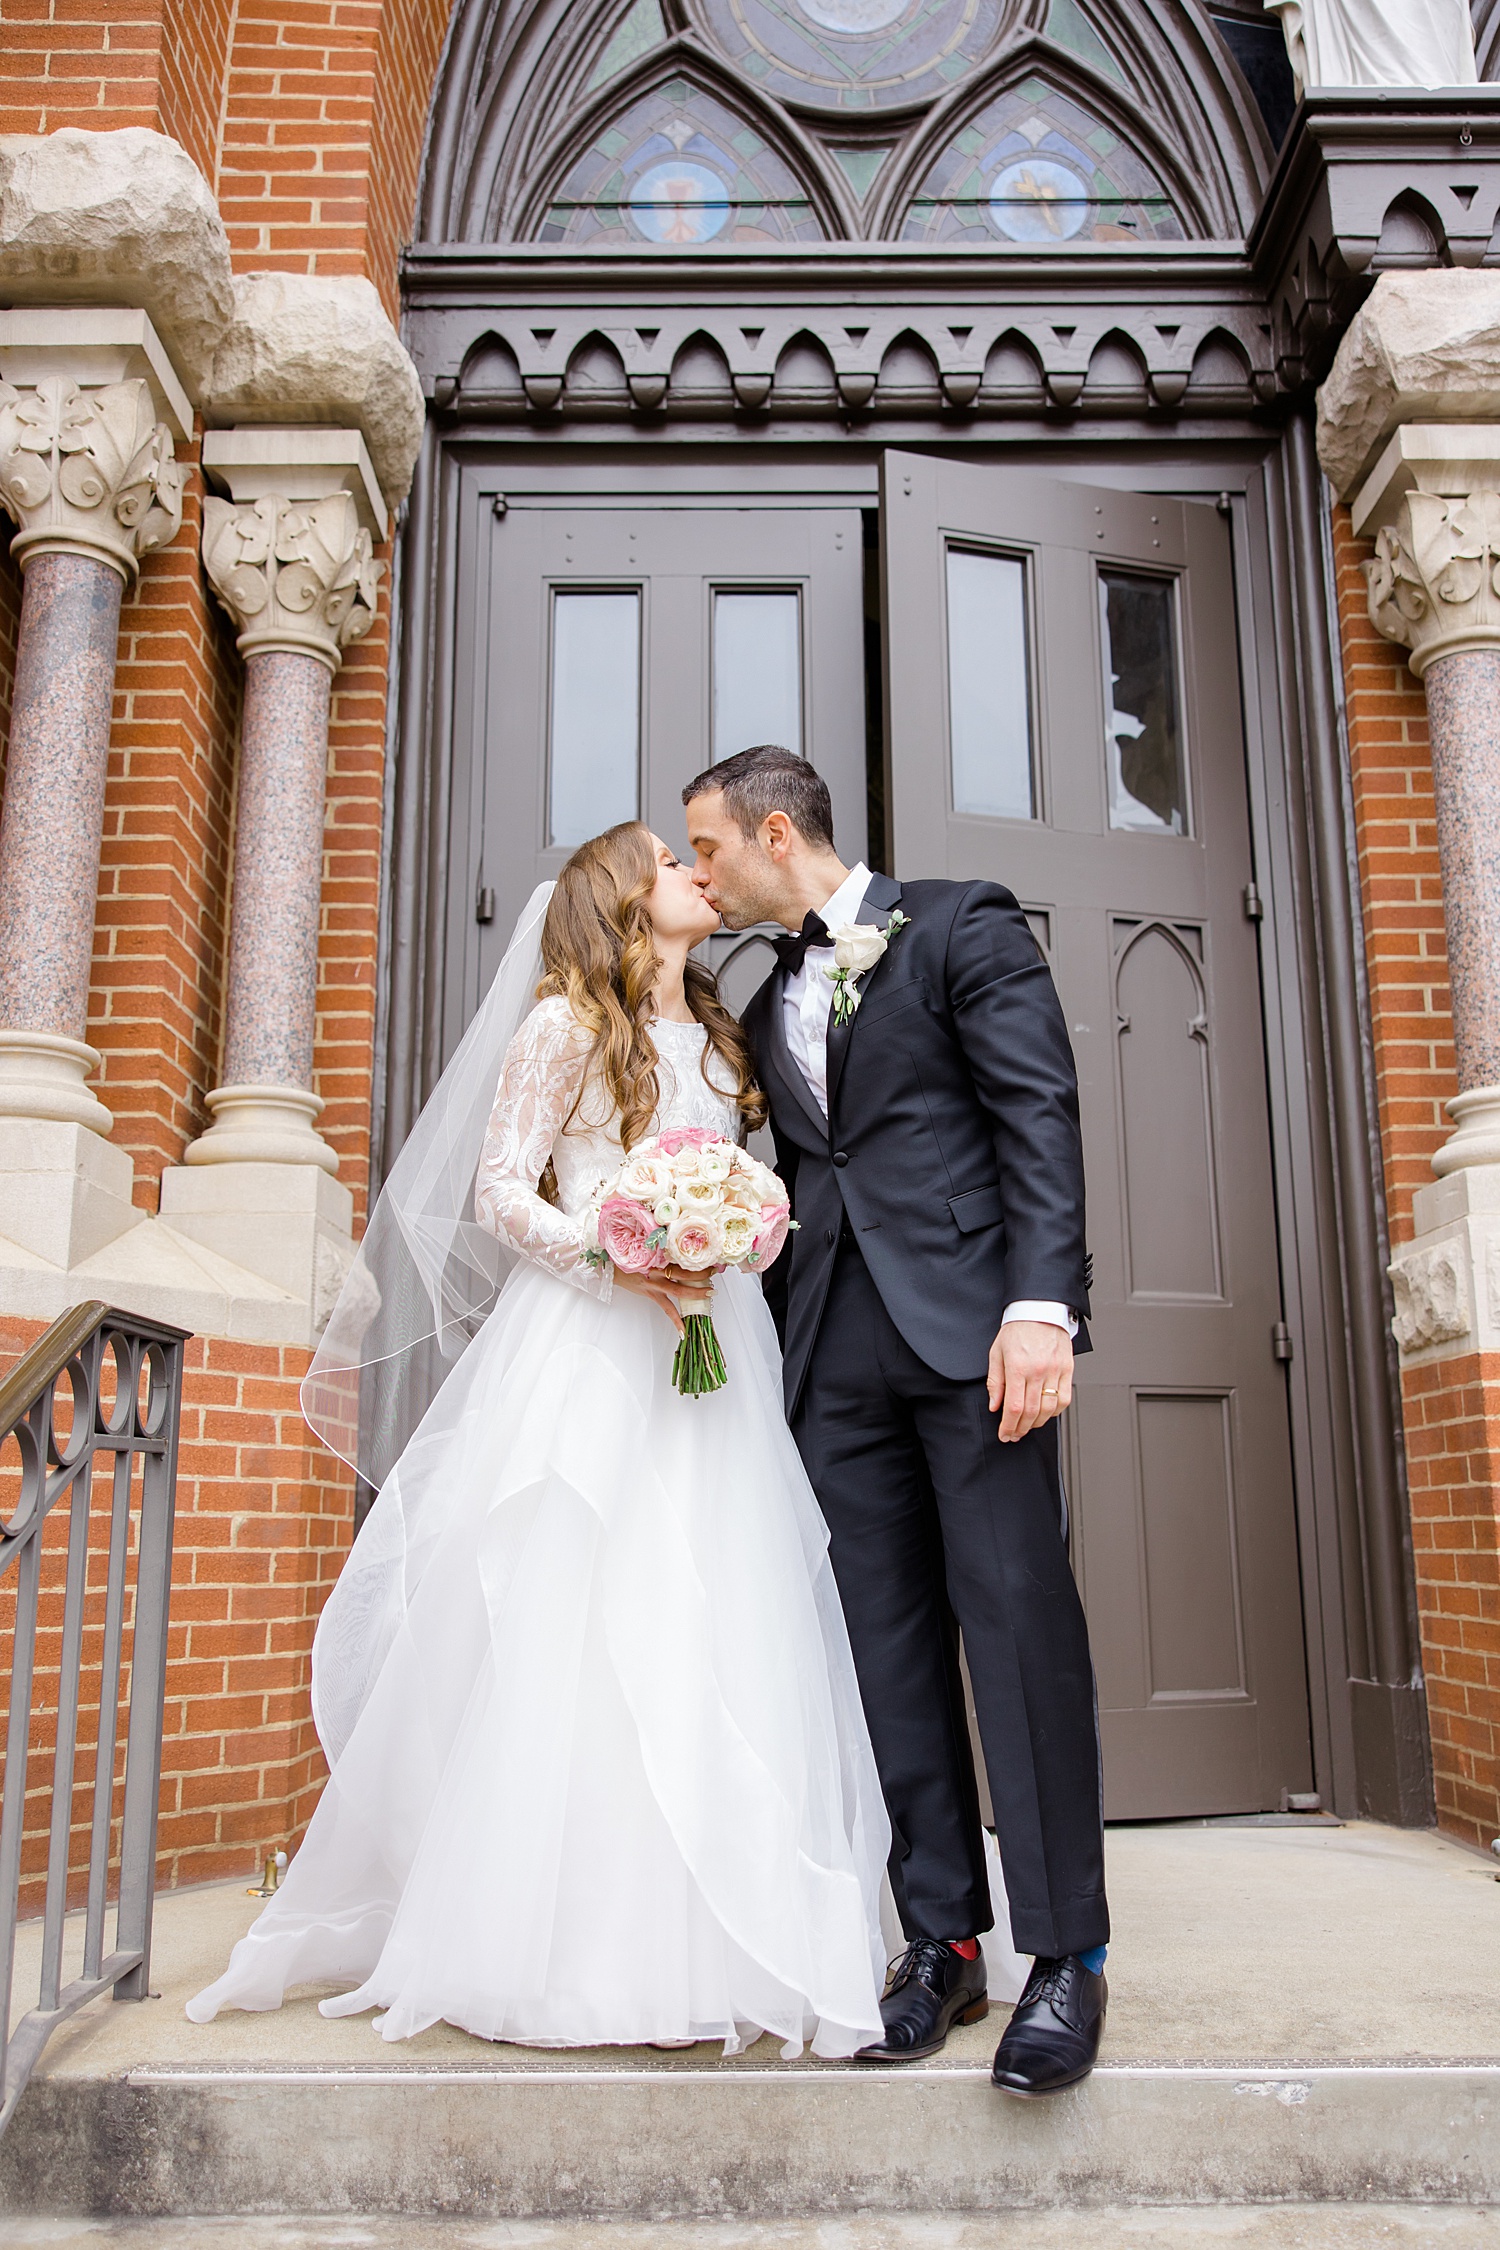 newlyweds kiss outside doors of church